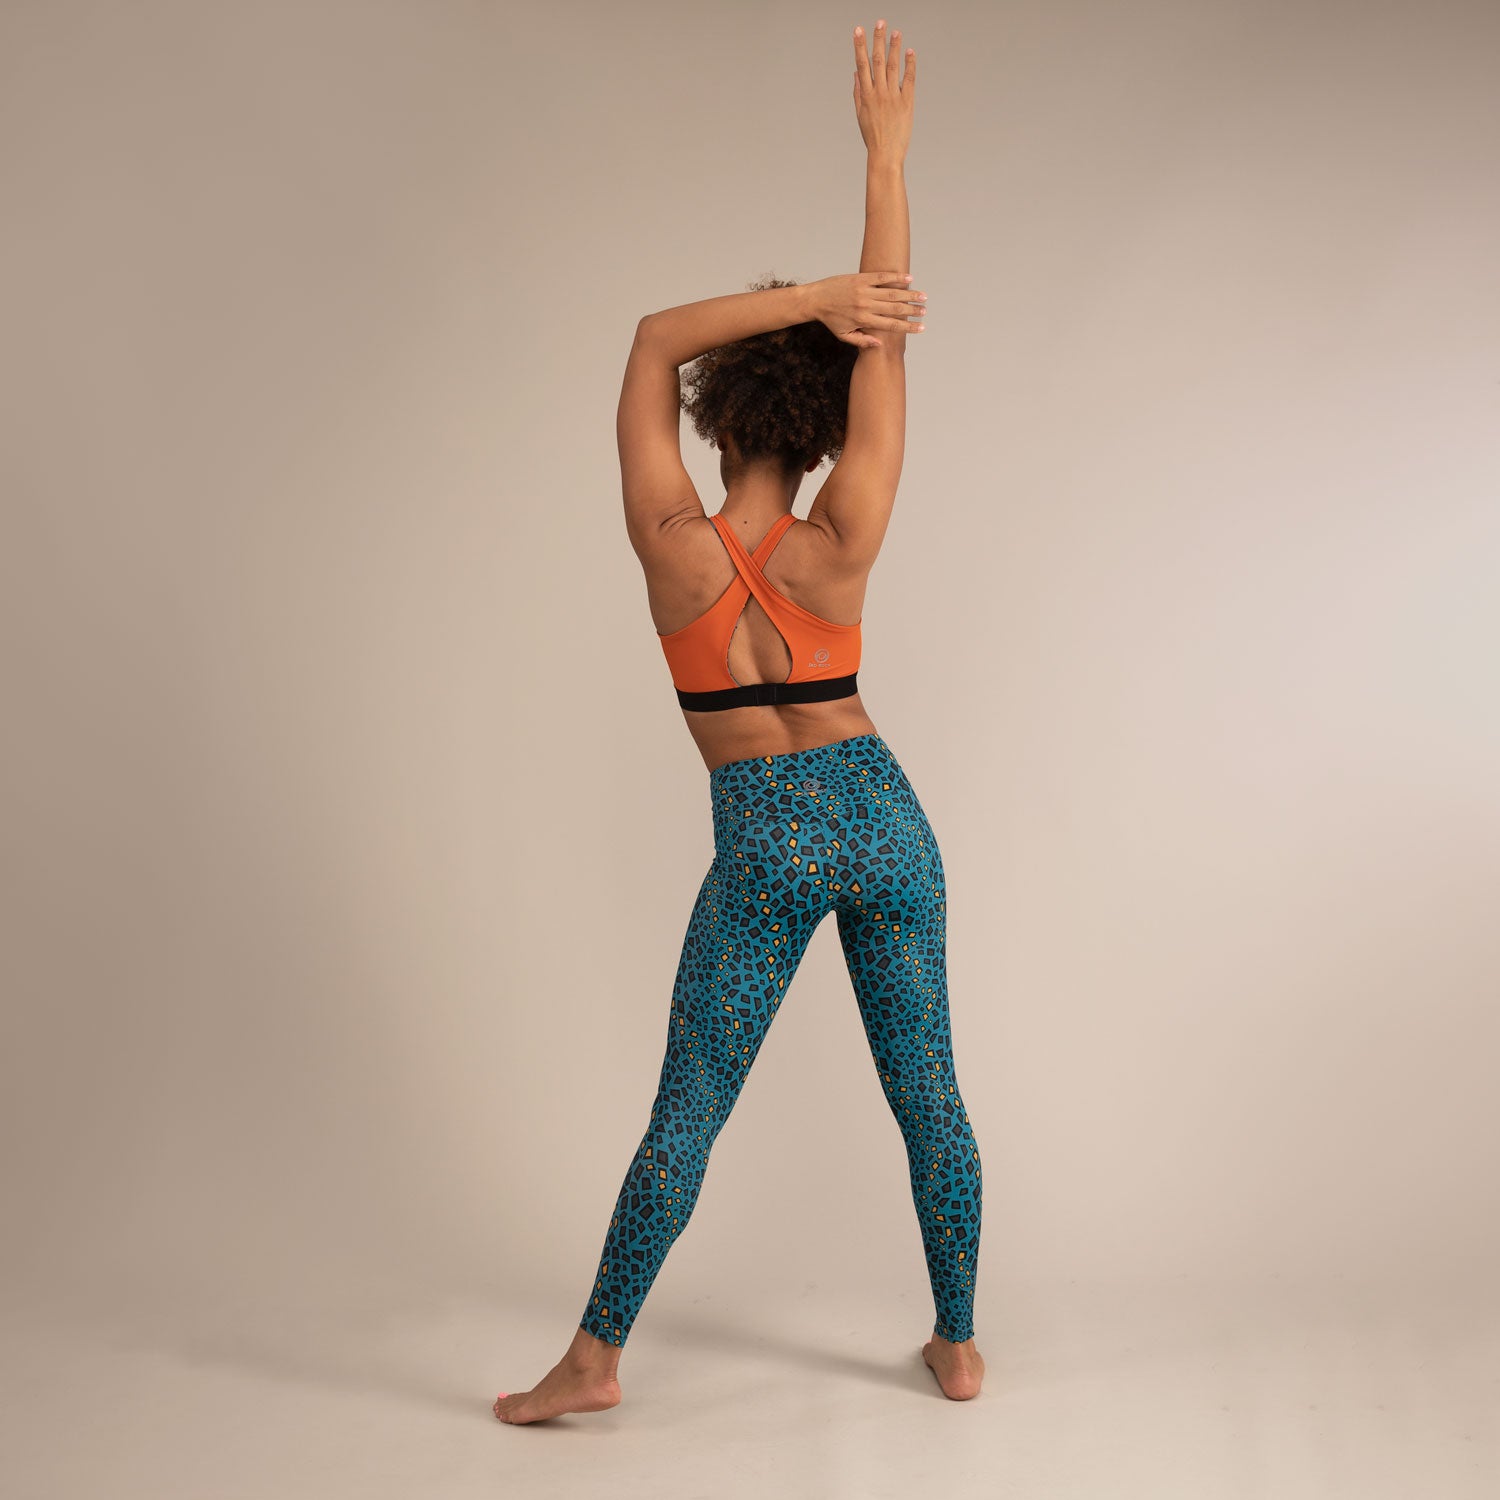 advanced intermediate yoga poses - Stock Illustration [96059641] - PIXTA